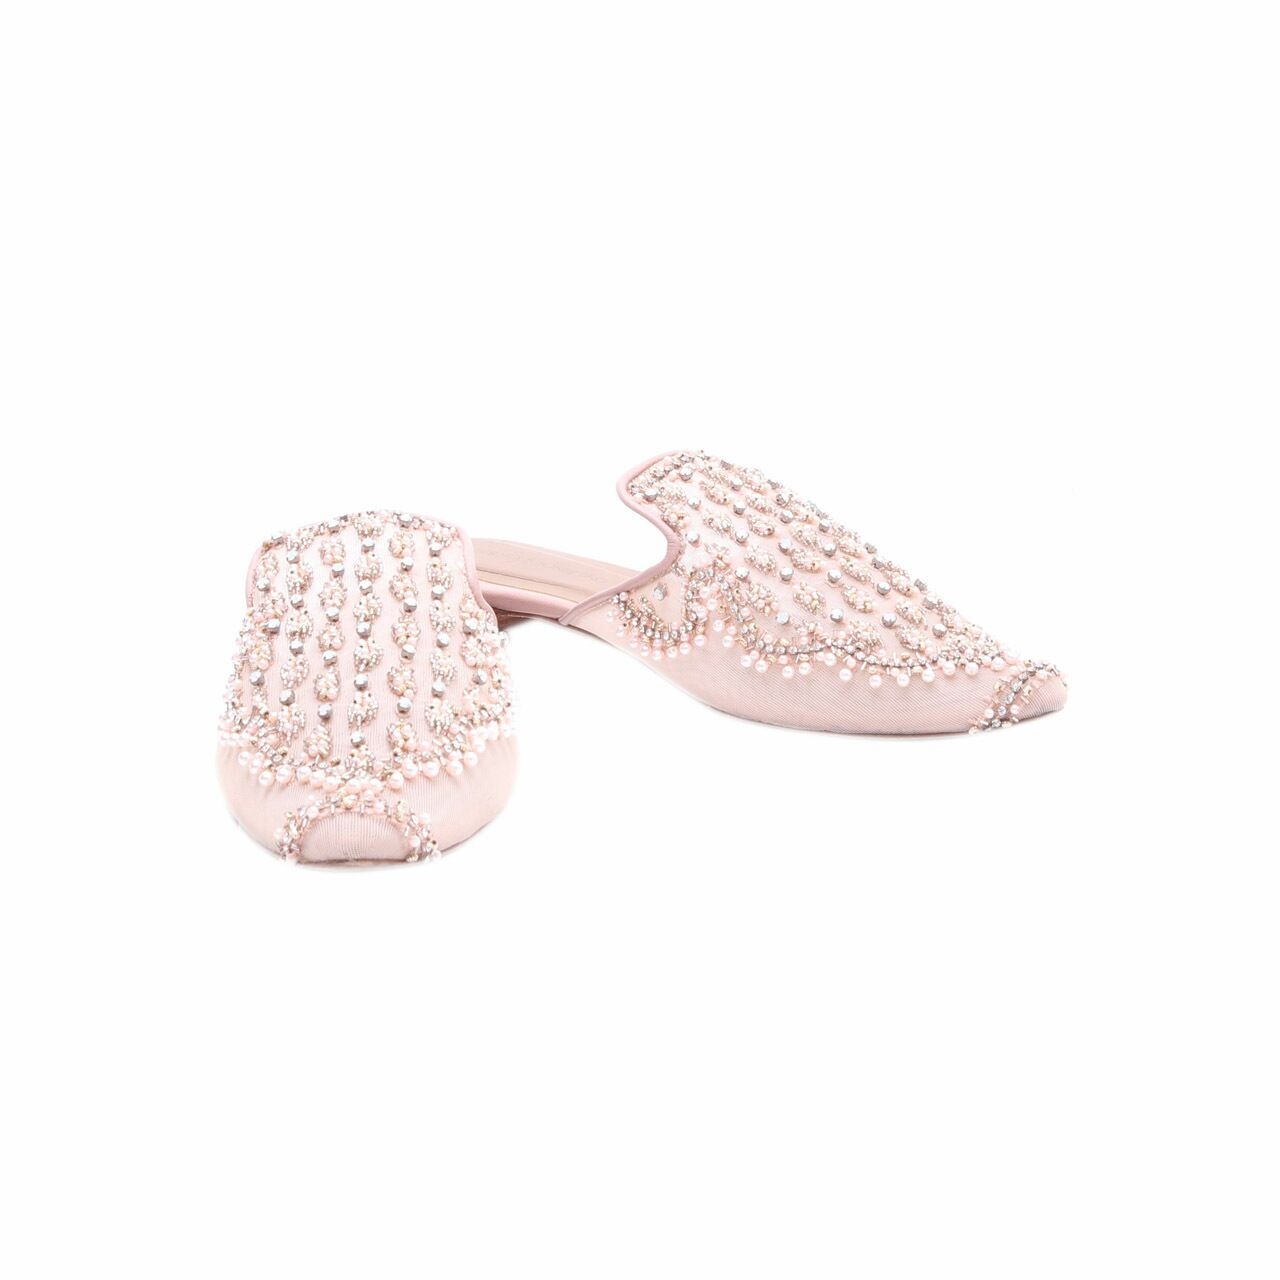 Sapto Djojokartiko Pink Mauve Embellished Mules Sandals